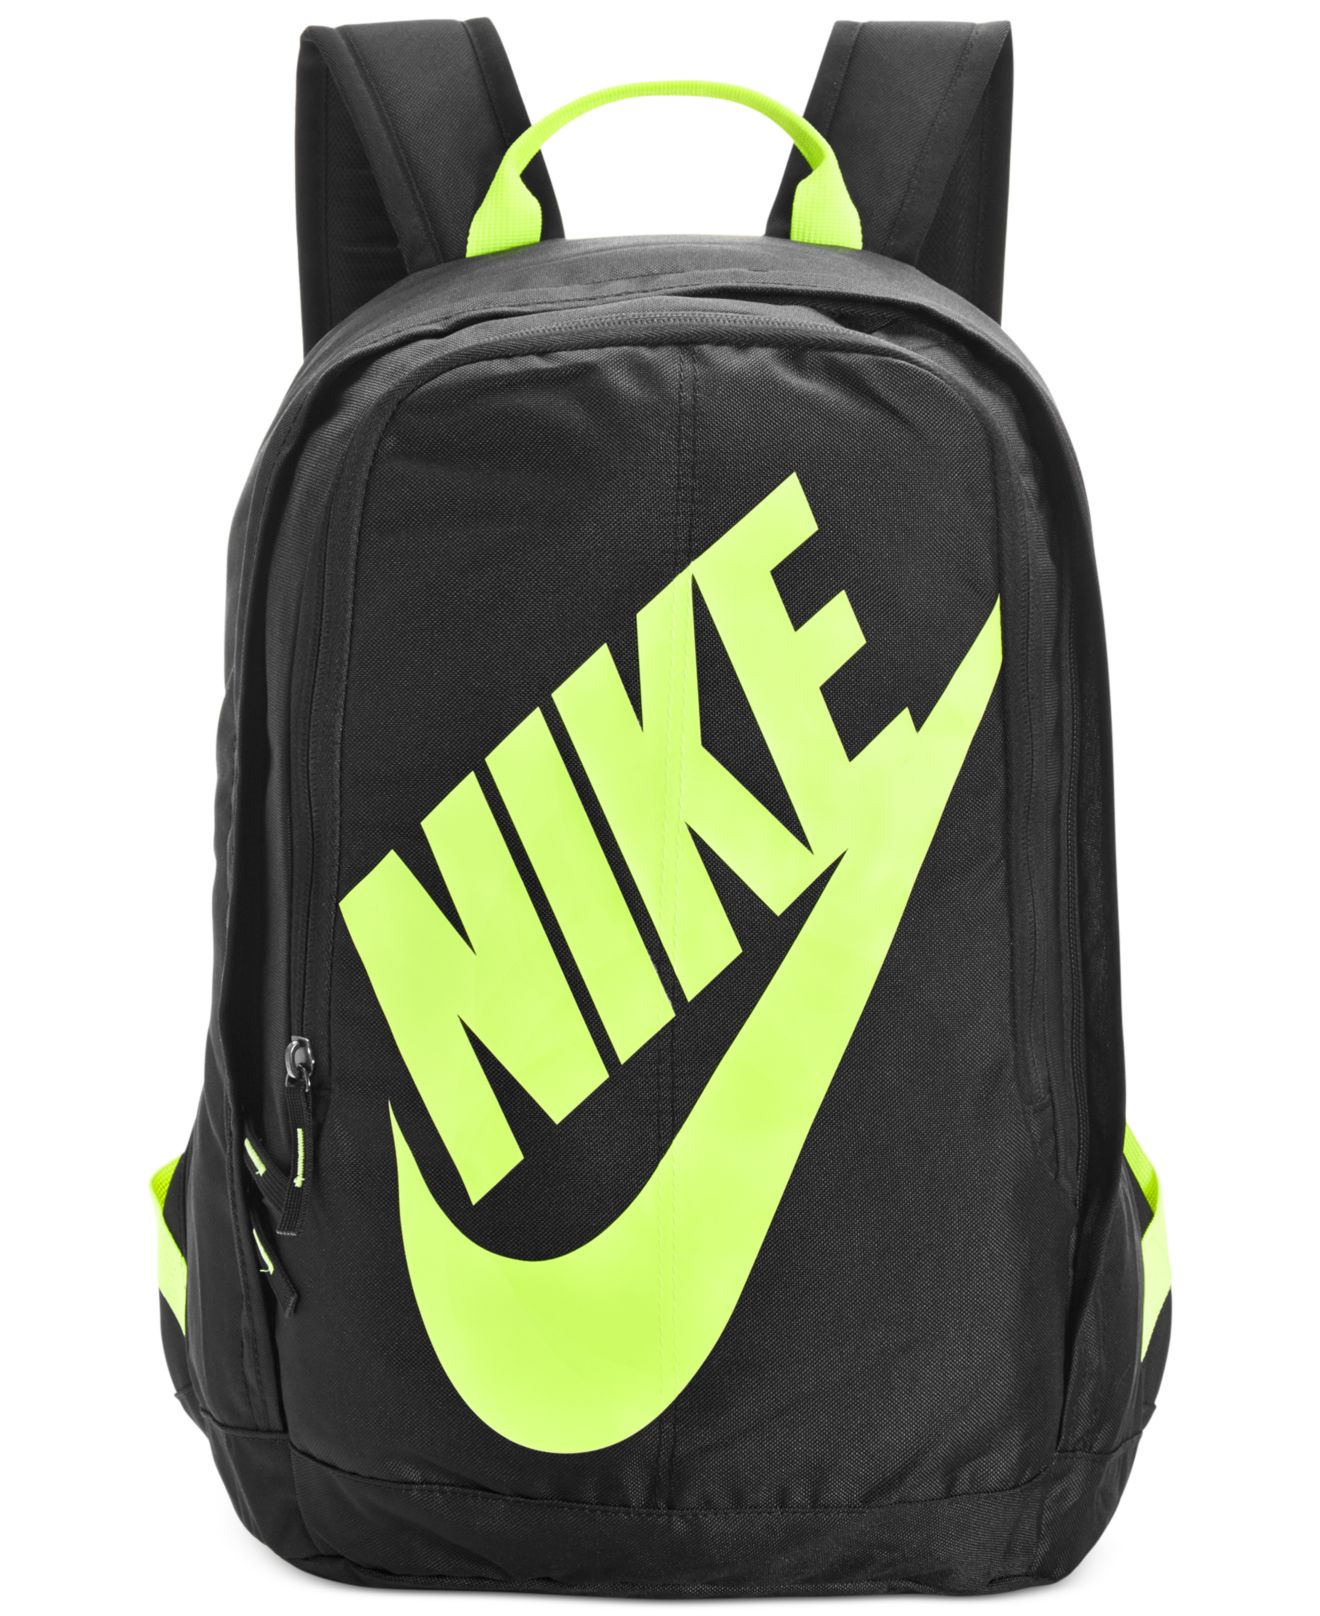 neon green and black nike backpack